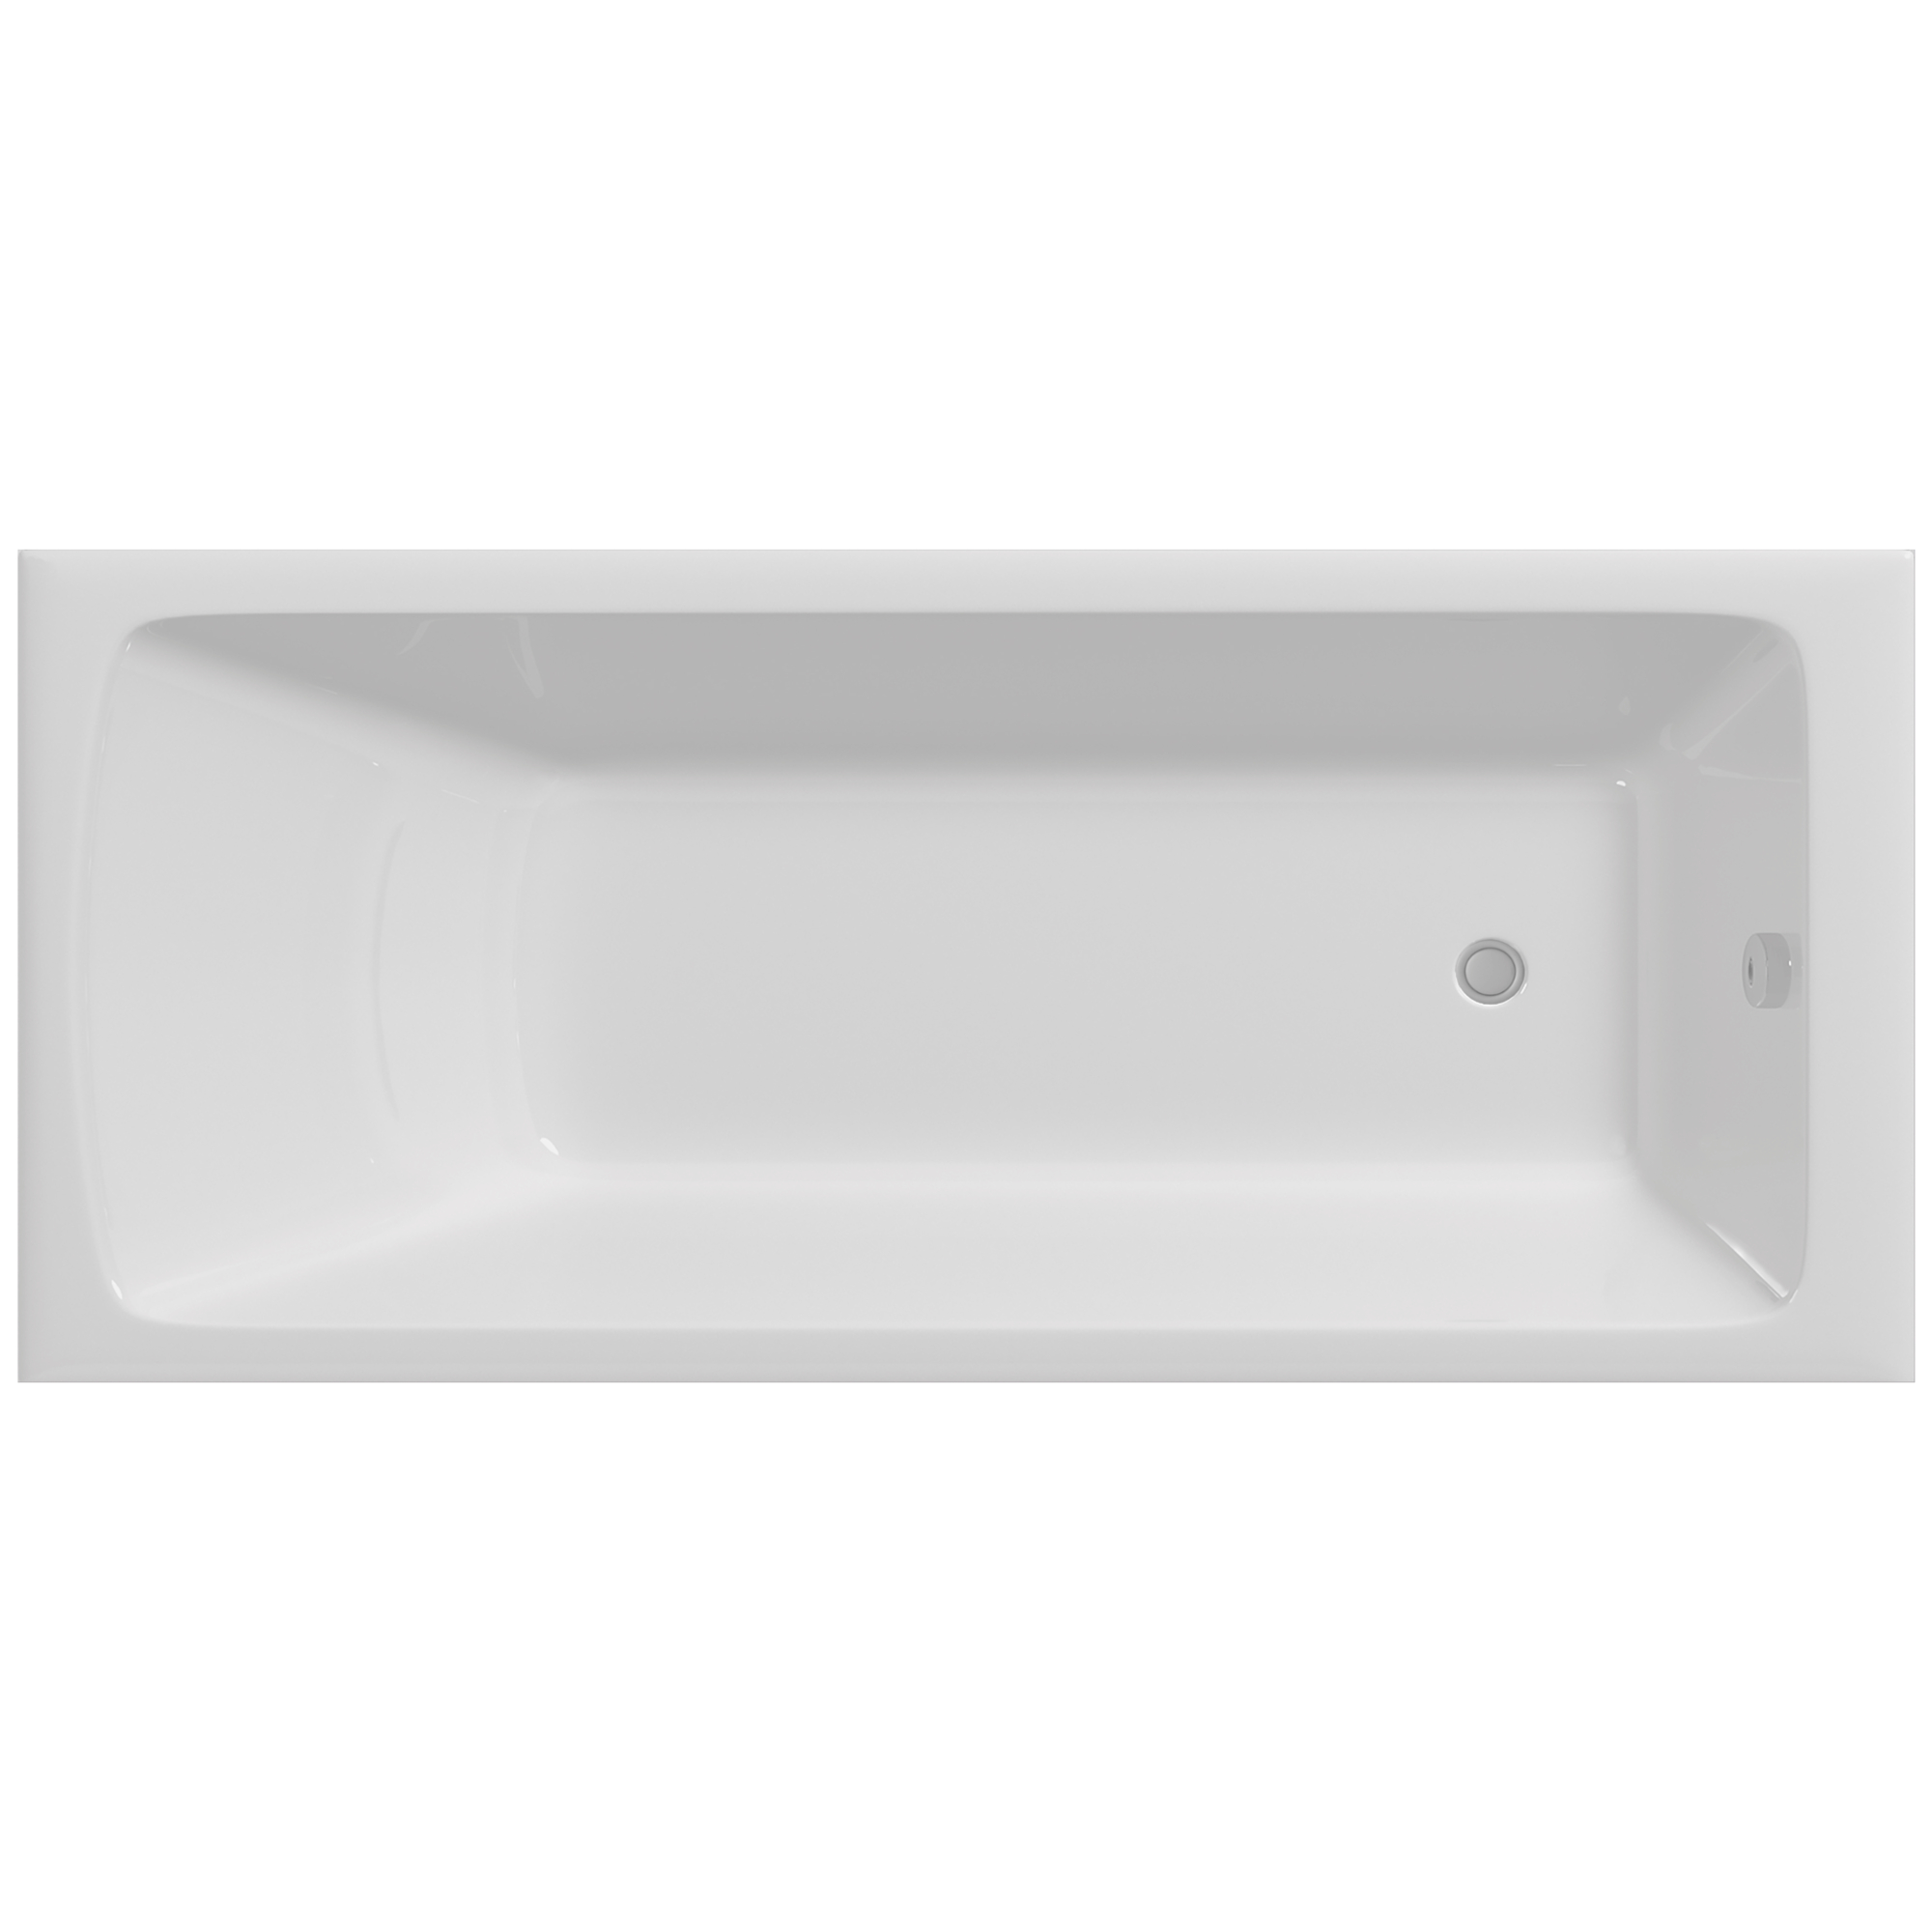 Чугунная ванна Delice Camelot 180х80 DLR230616 на ножках ванна из литьевого мрамора и стиль риспекта 180х80